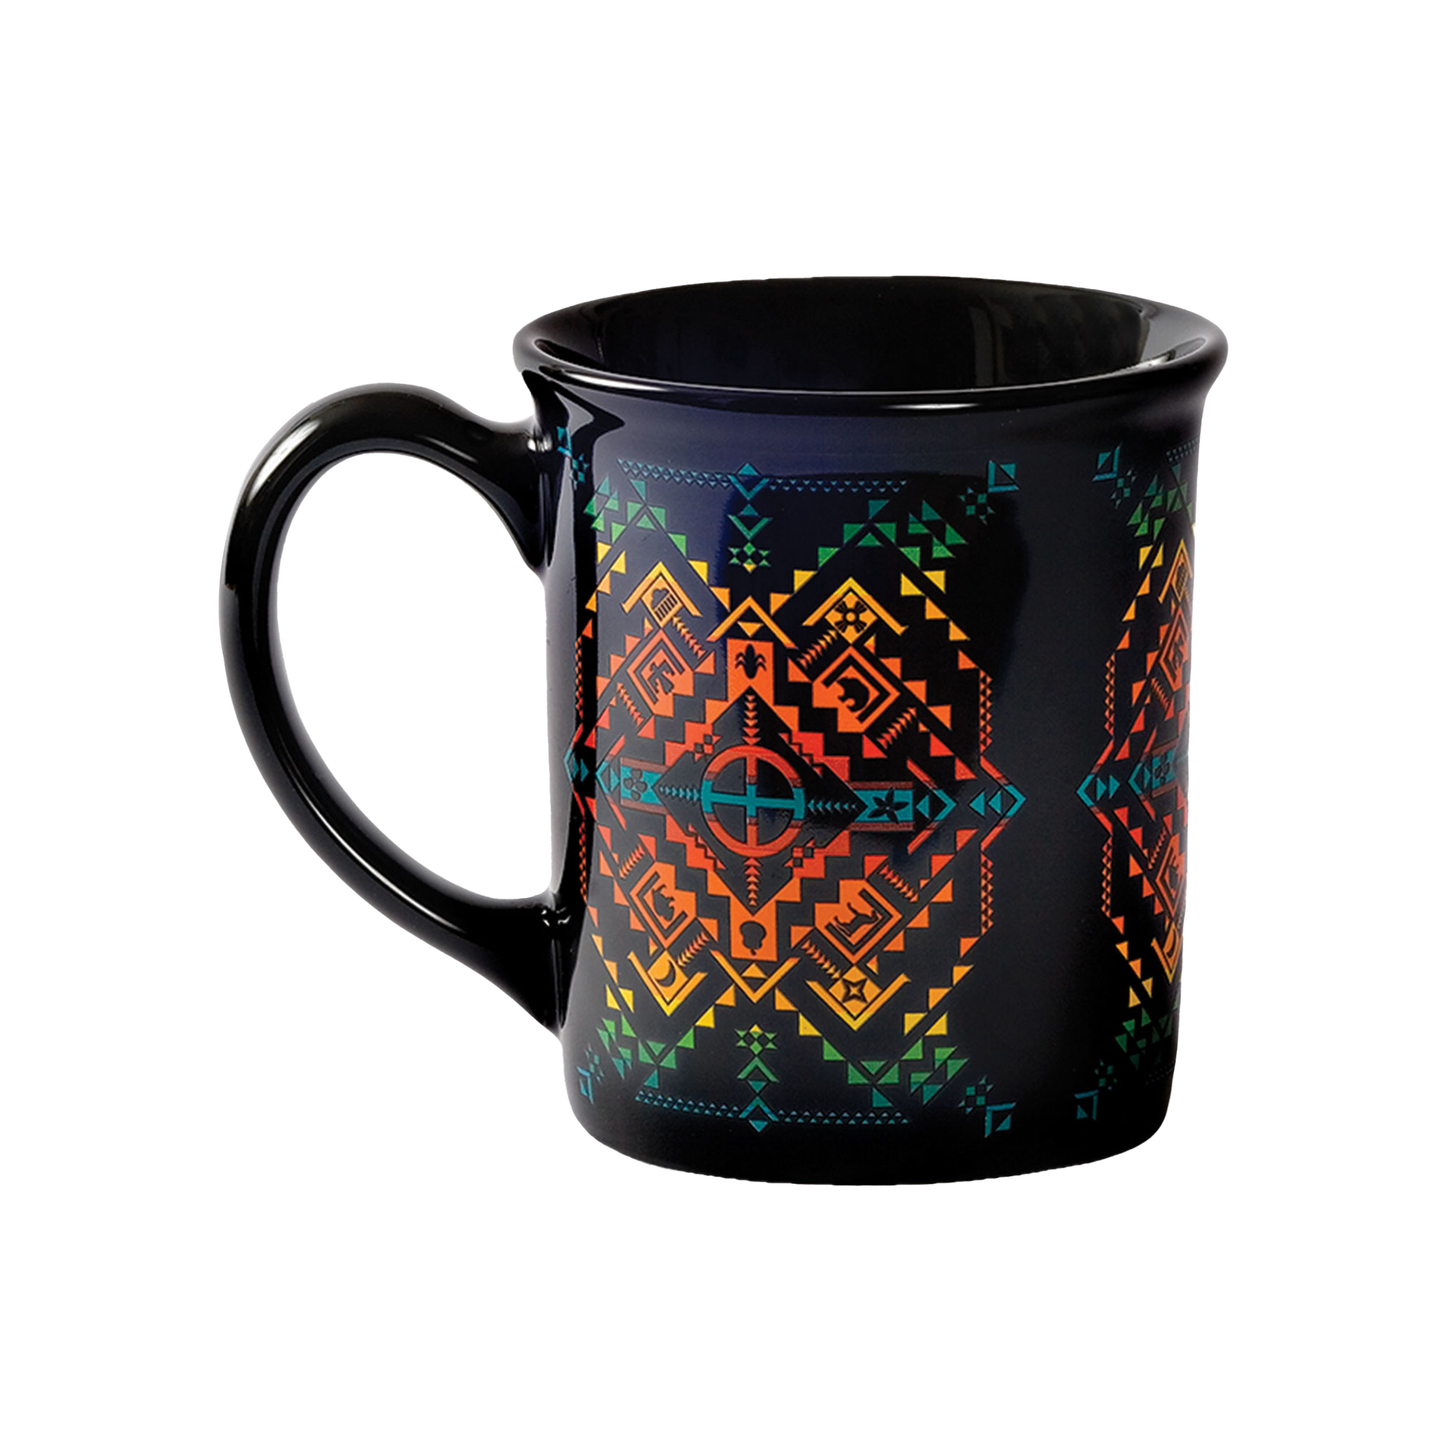 Pendleton Coffee Mug - Shared Spirits